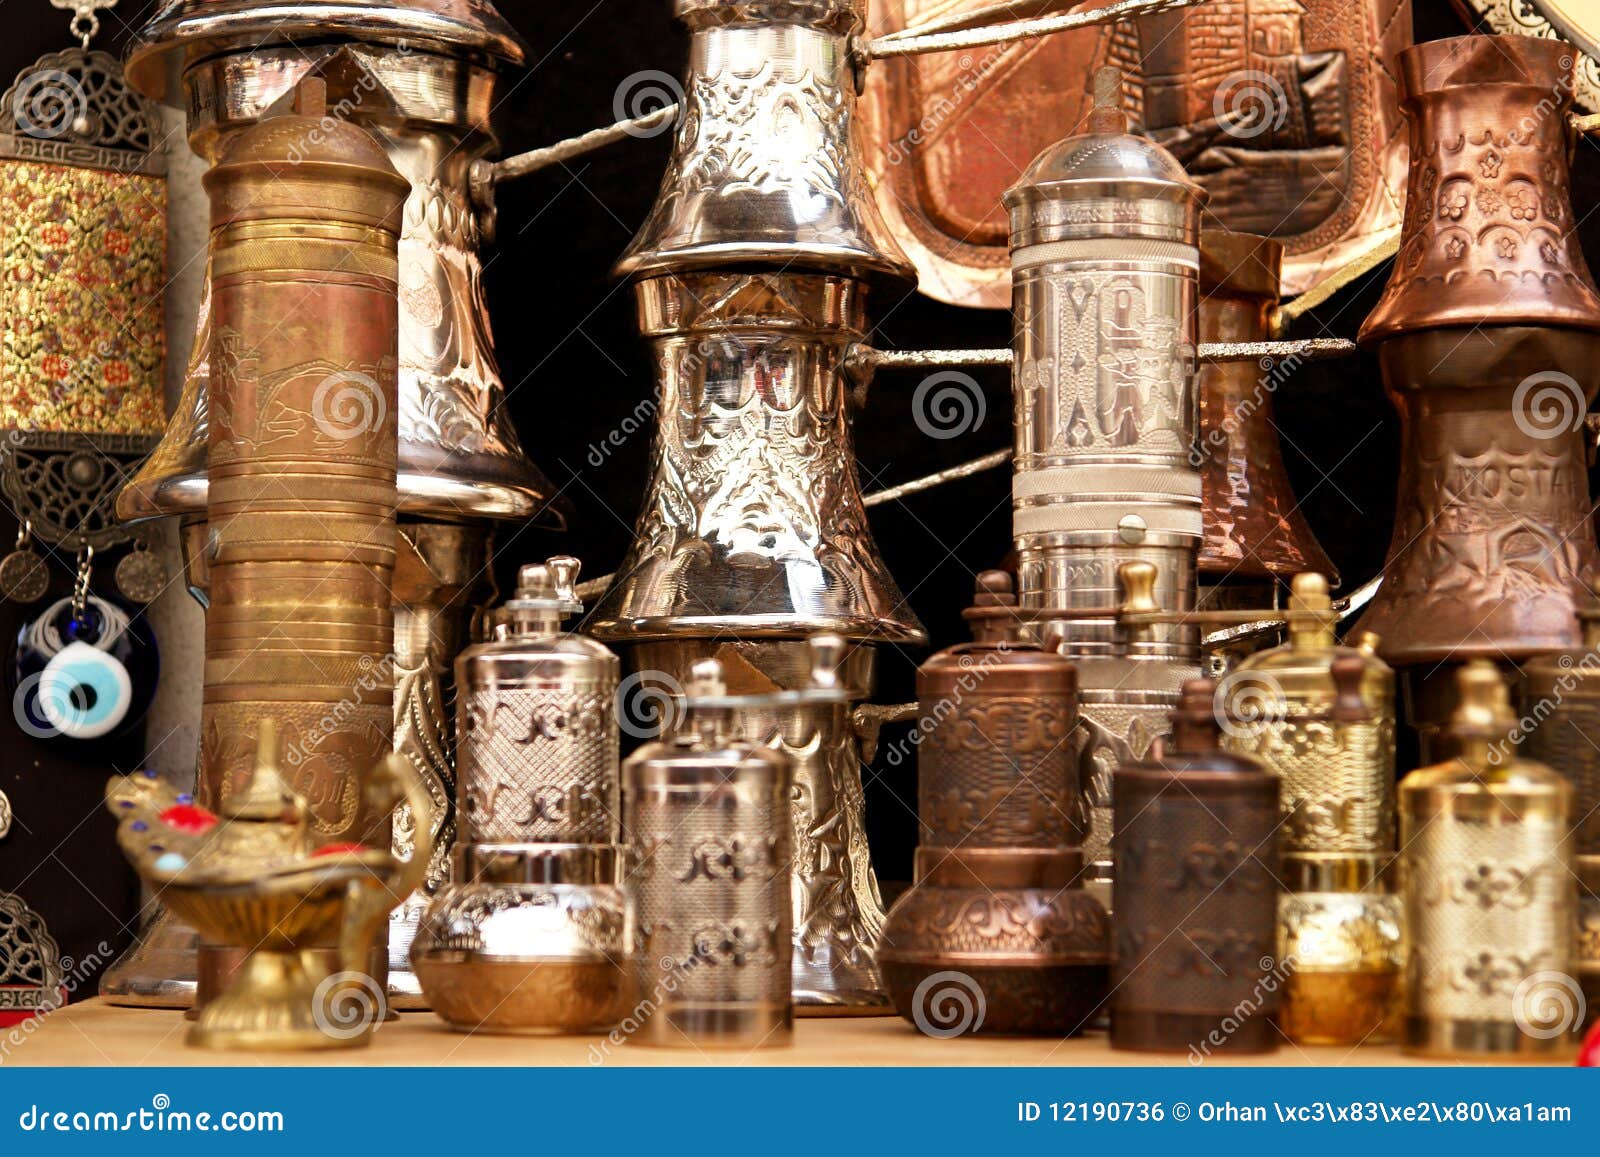 brass pepper mills in souvenir shop in mostar